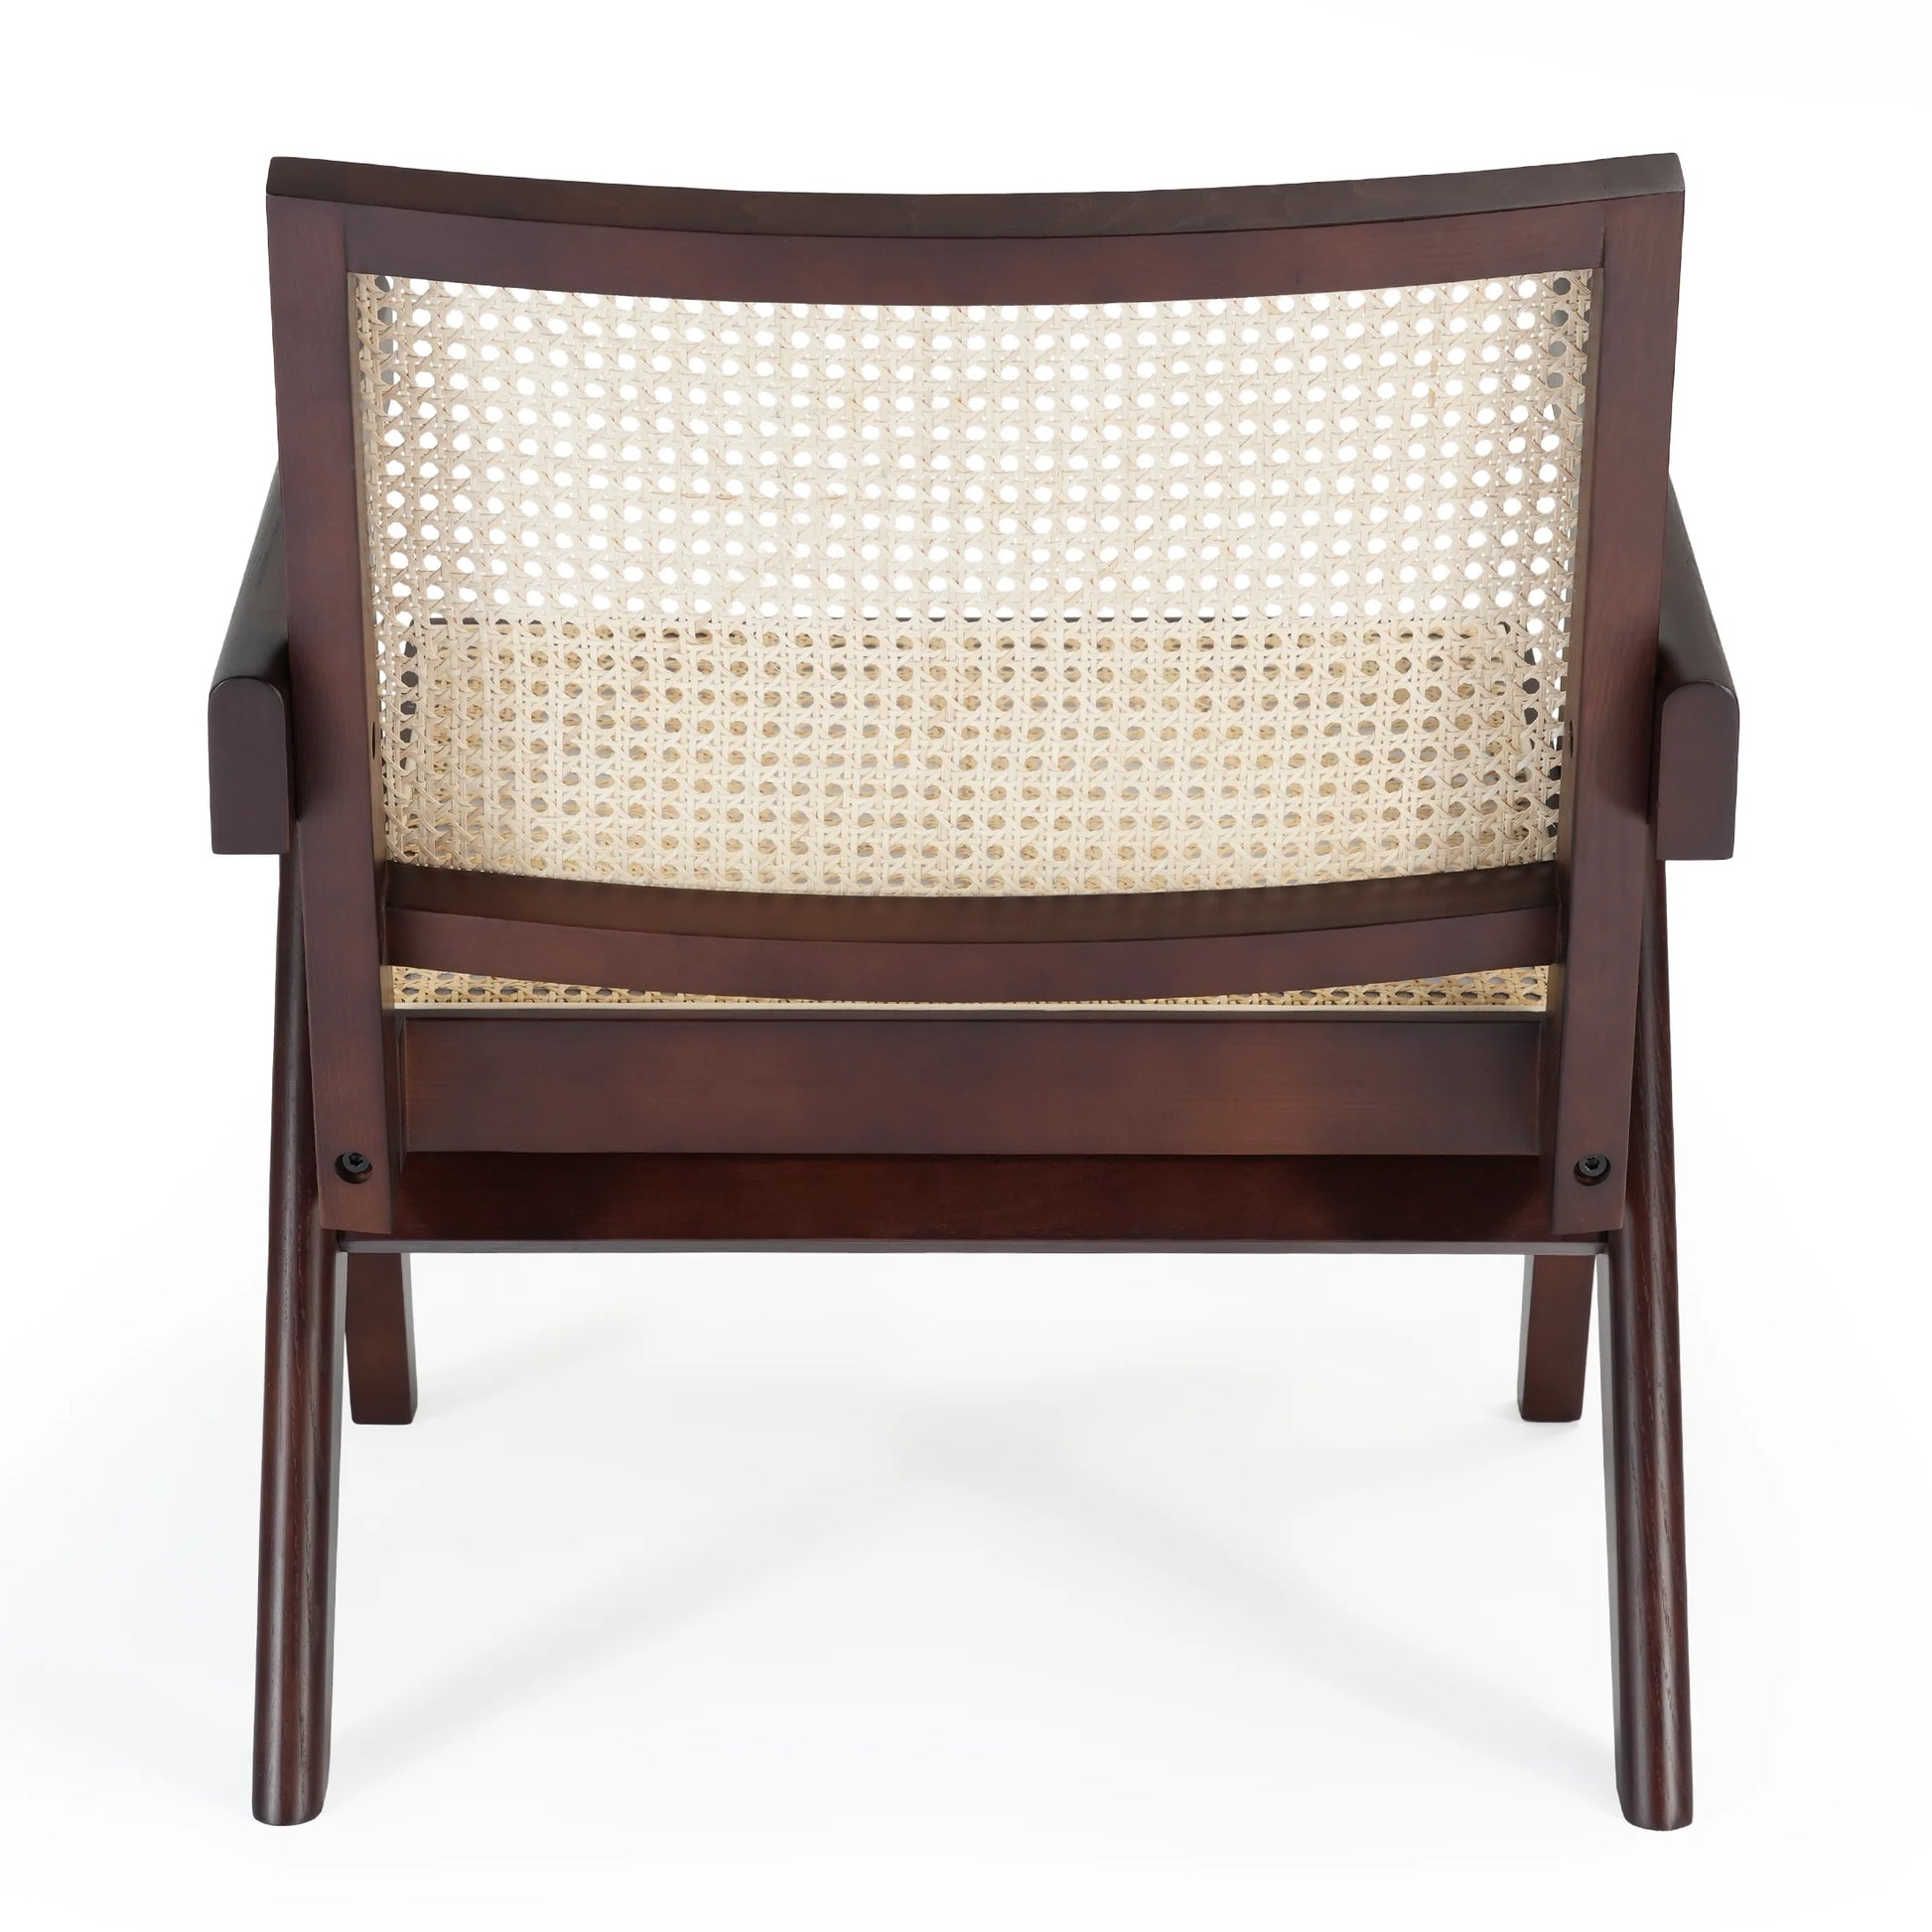 CORX Designs - Chandigarh Rattan Leisure Chair - Review